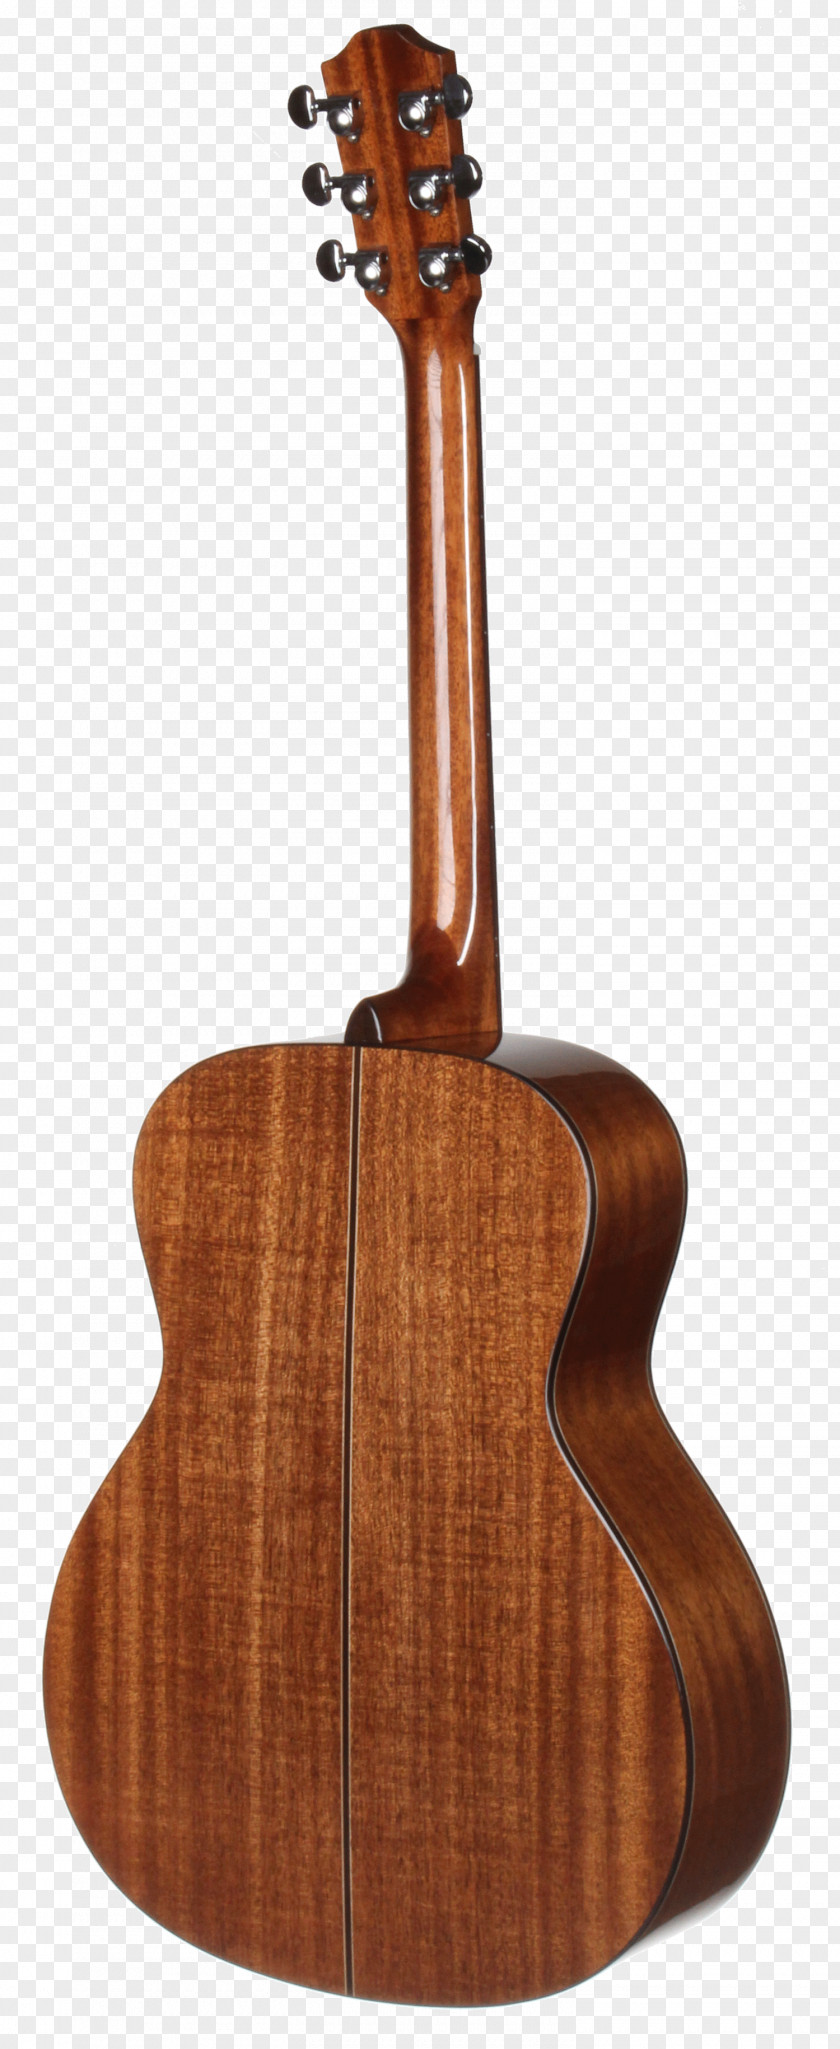 Musical Instruments C. F. Martin & Company Ukulele Acoustic Guitar PNG